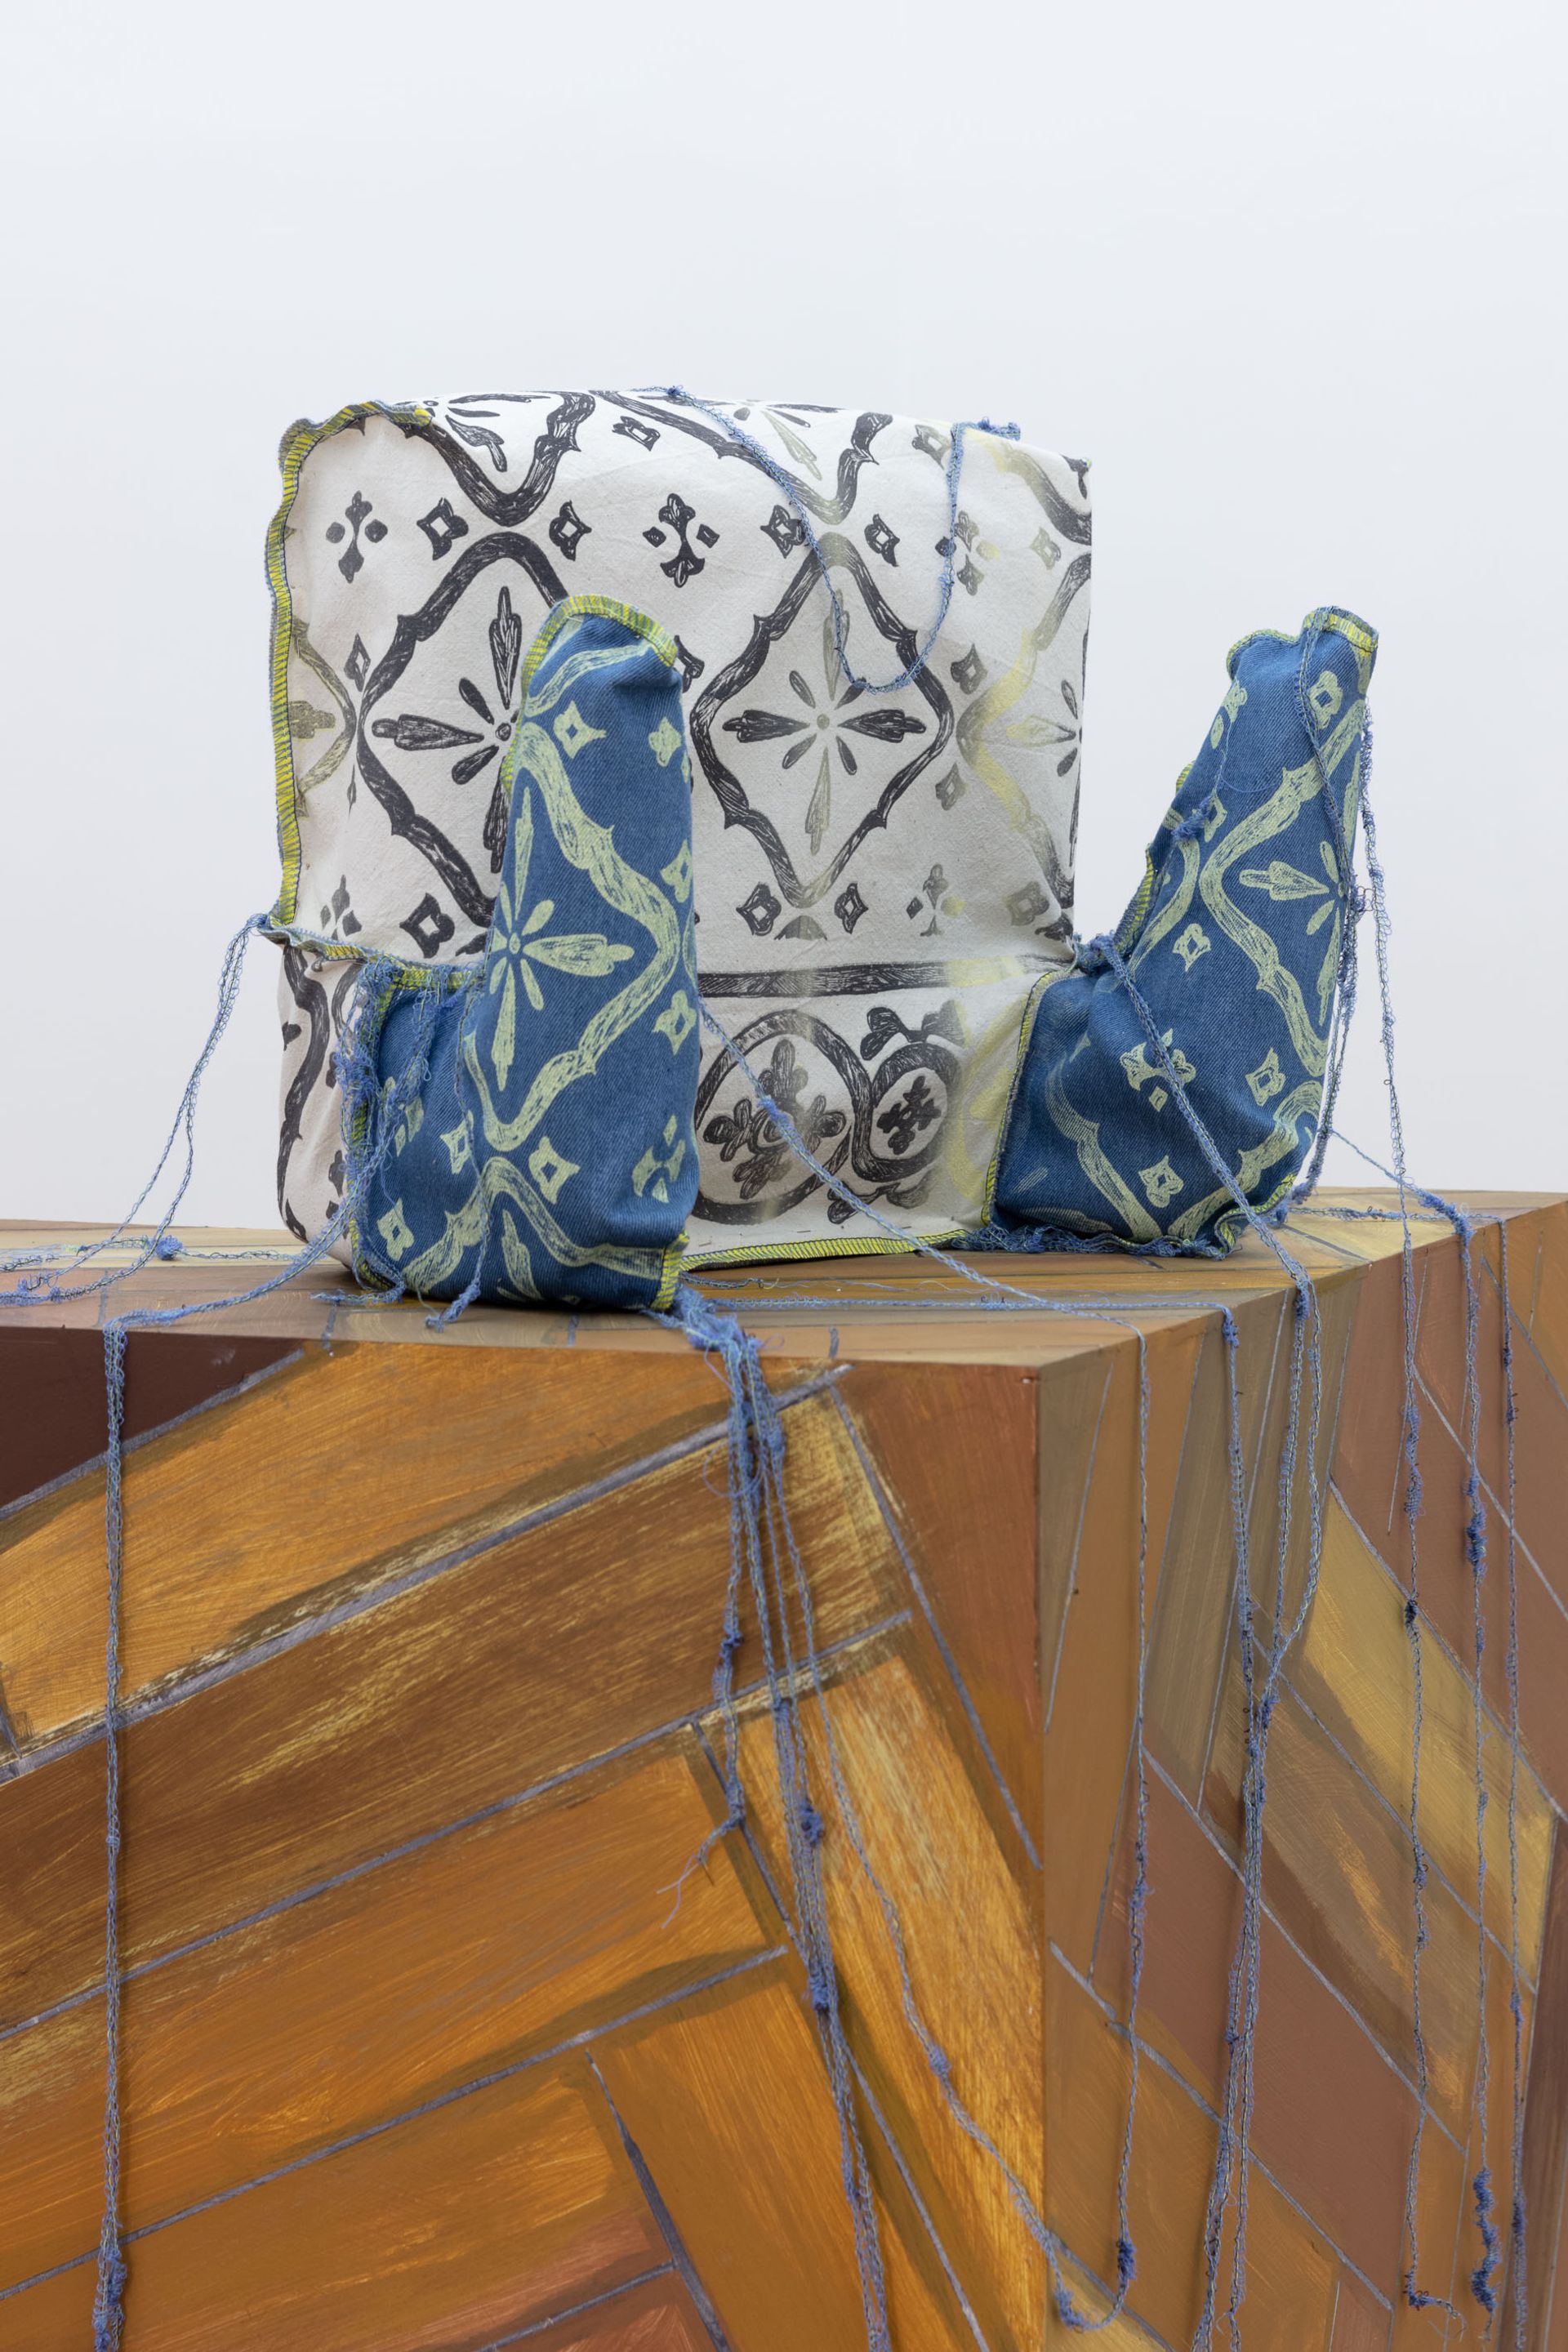 Ana Navas, Tuto de pollo, 2021, Baby car seat, Silkscreen print of industrial textile pattern, 80 × 40 × 40 cm